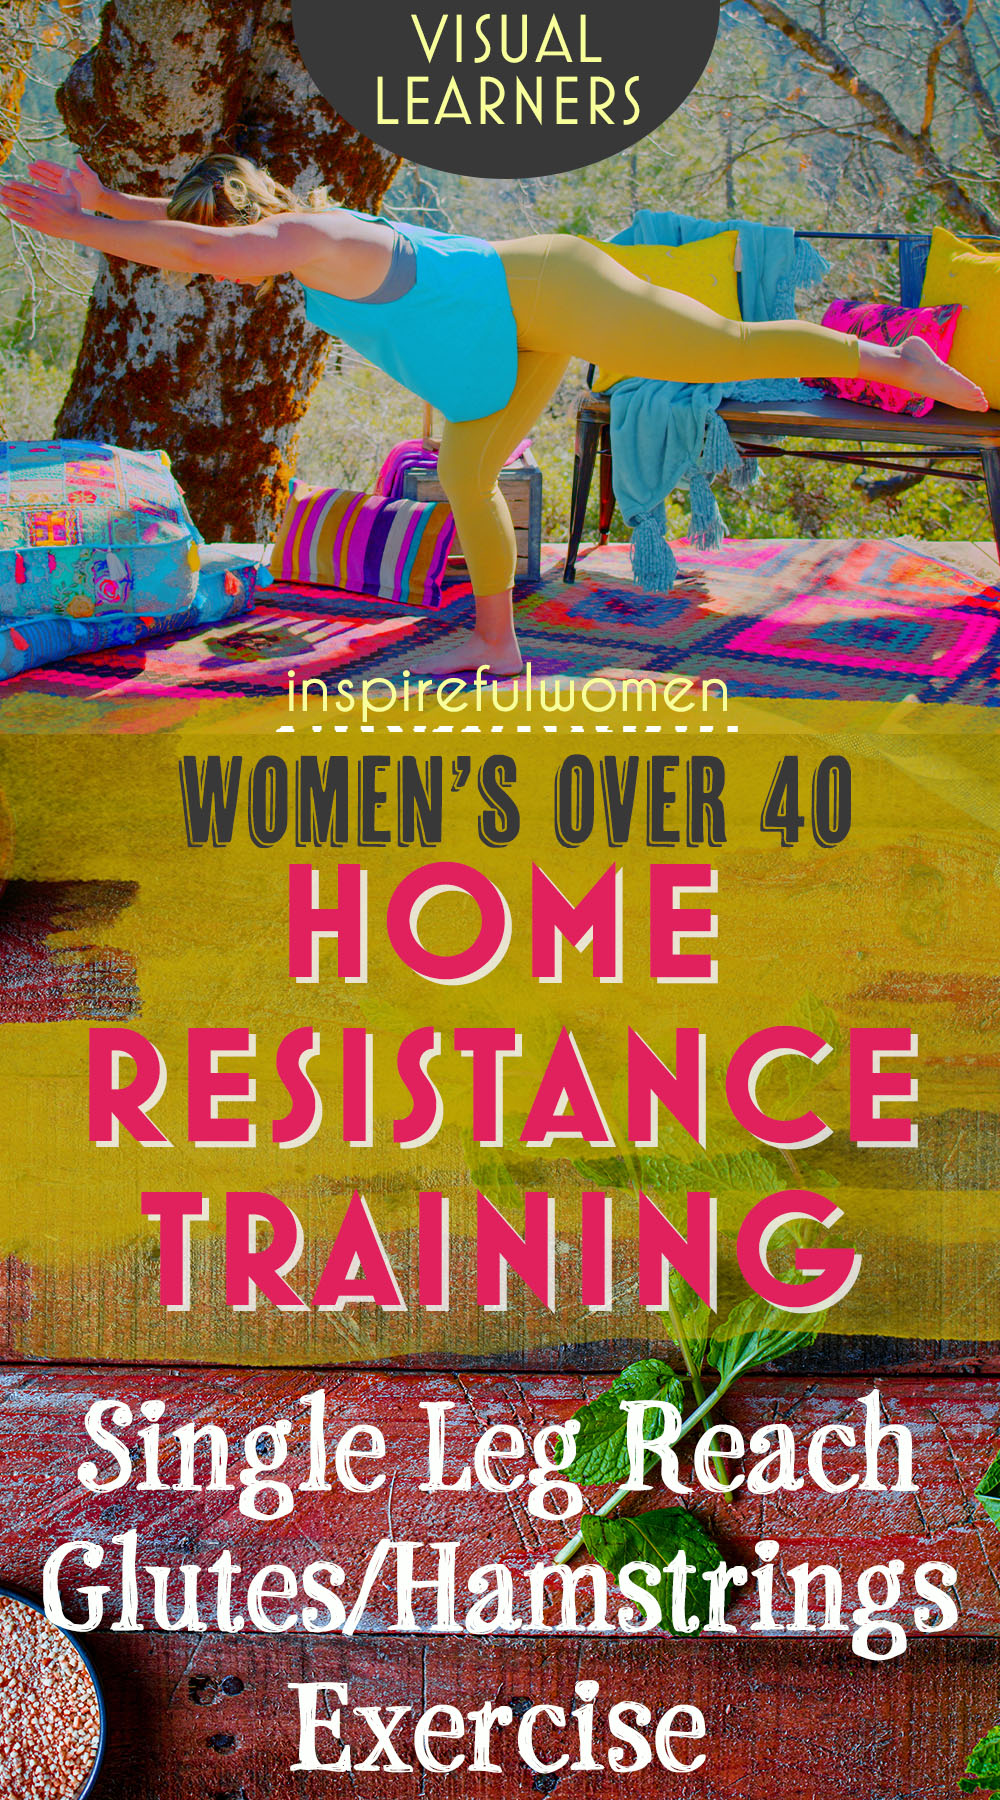 single-leg-reach-tipping-bird-glute-hamstring-workout-at-home-women-40+